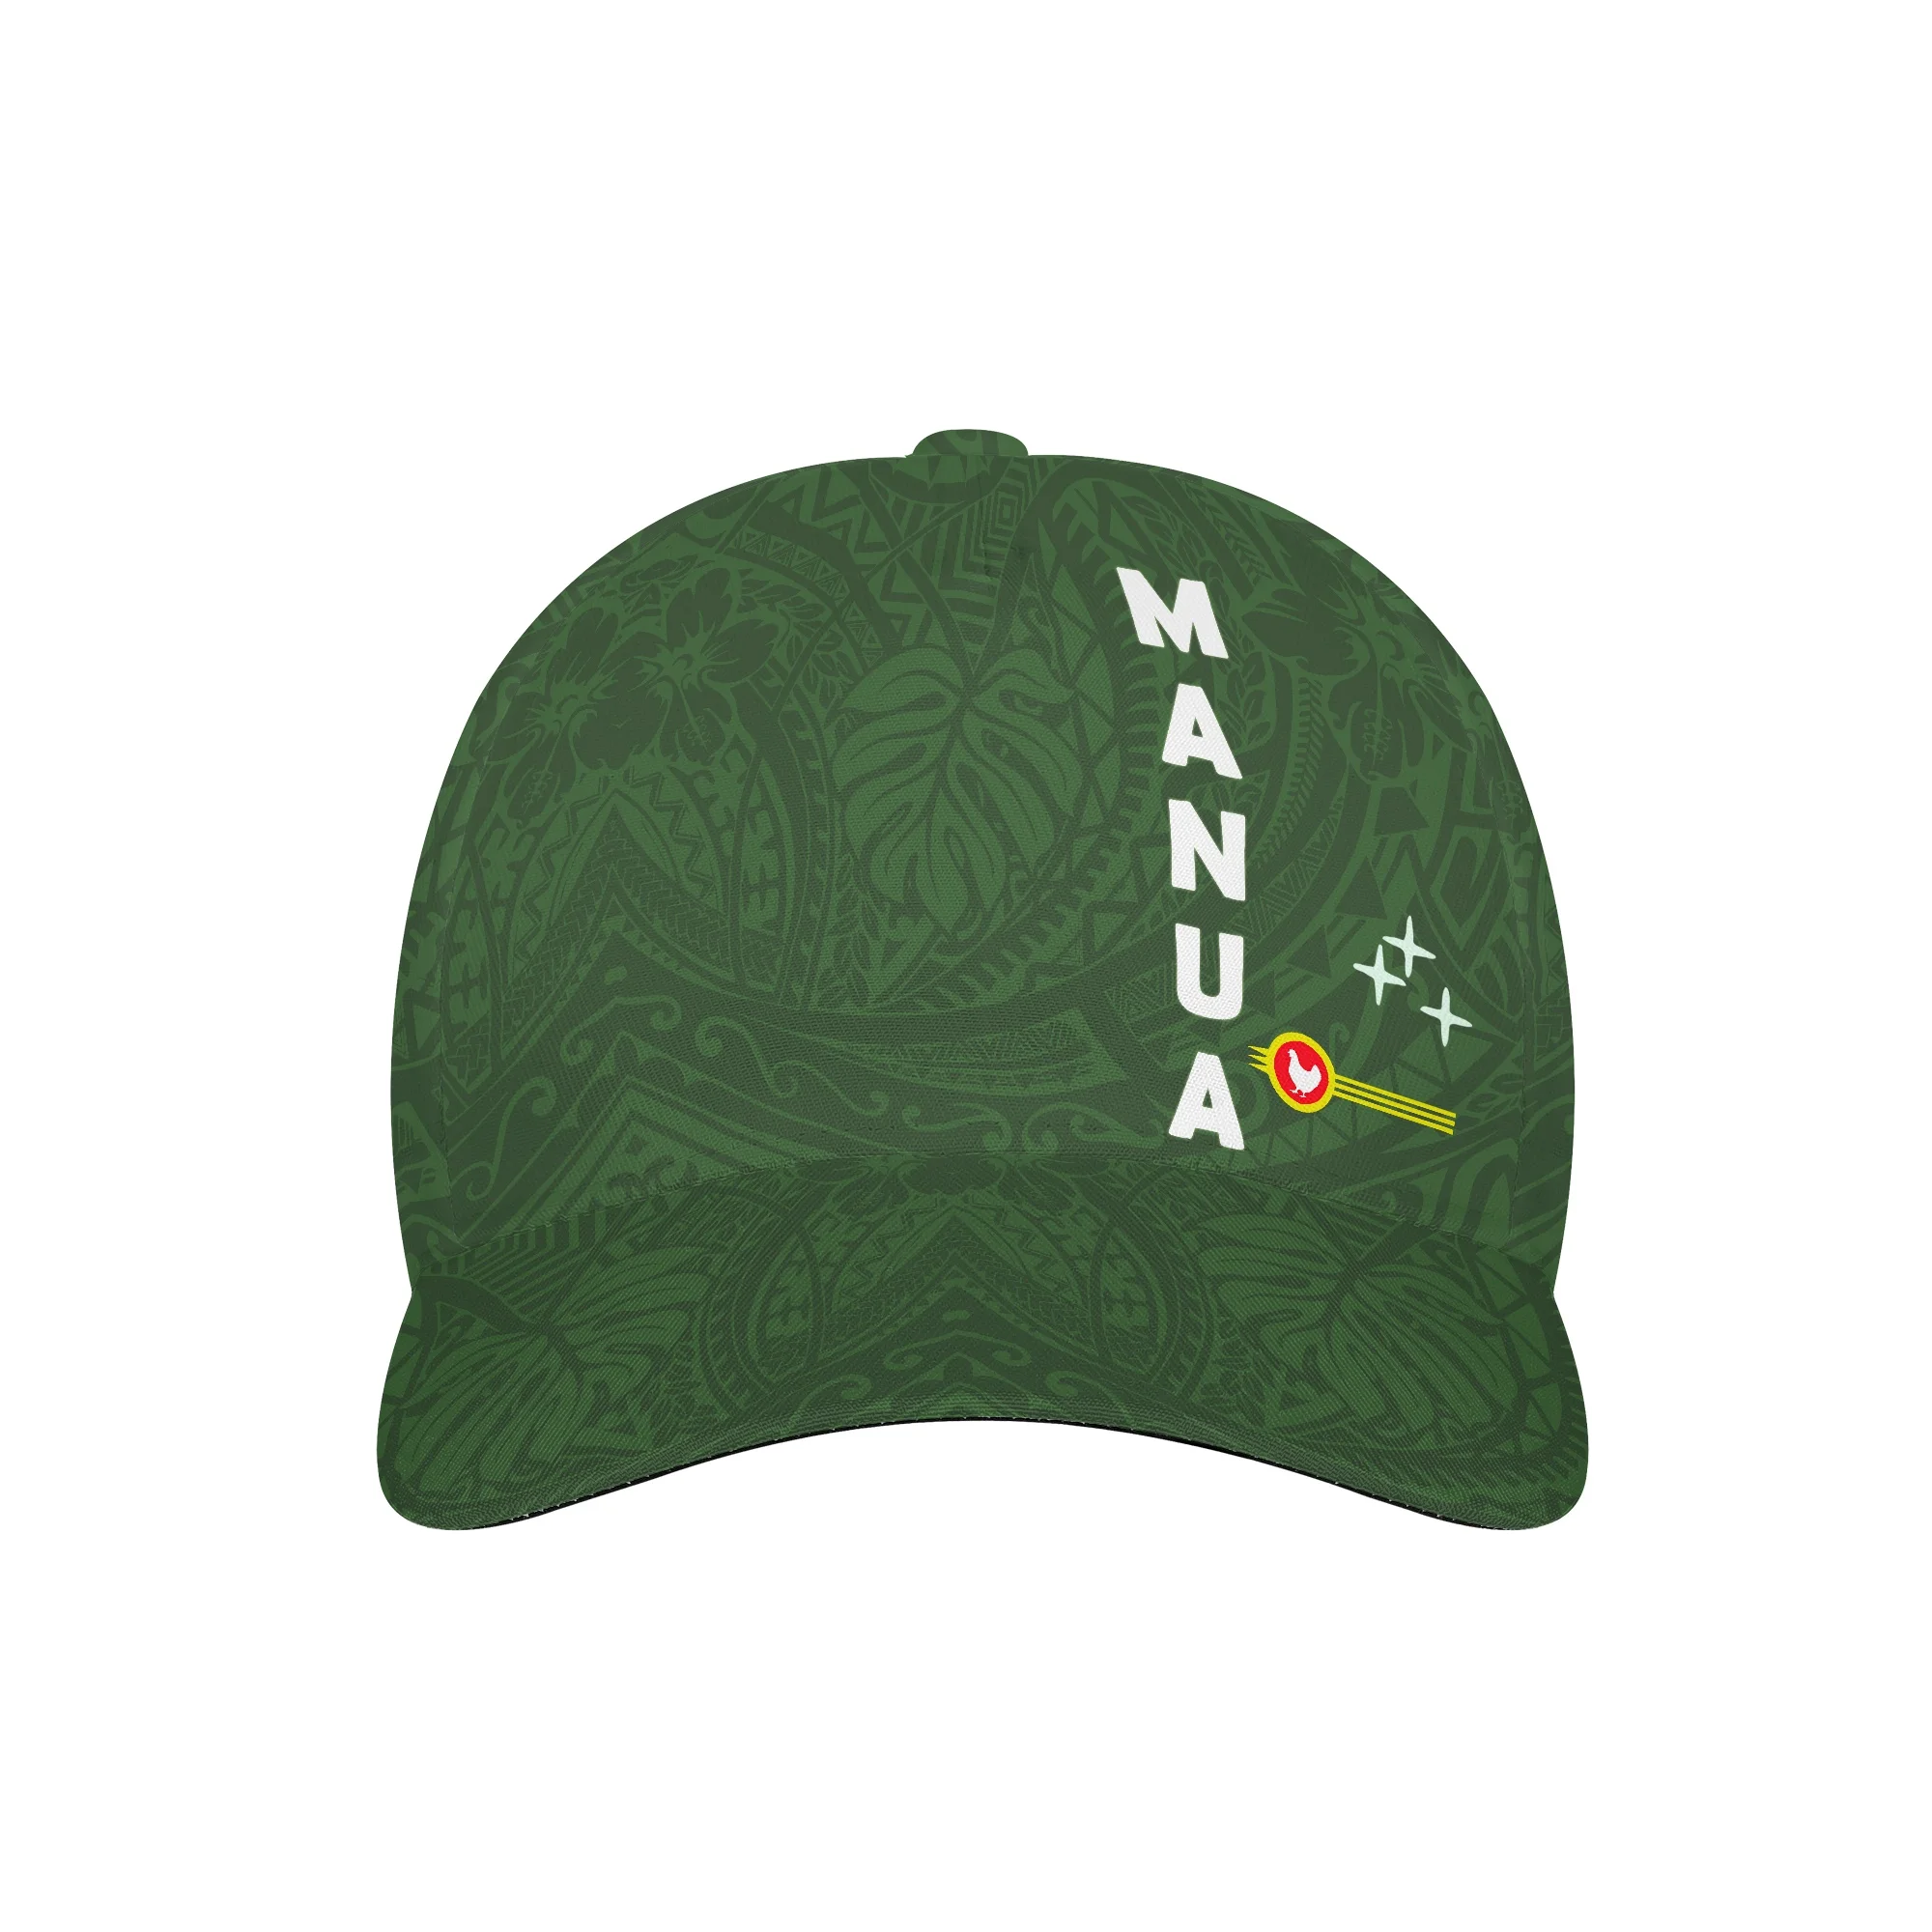 Wholesale American Amoa Manu' Islands Hats for men,20 Pieces